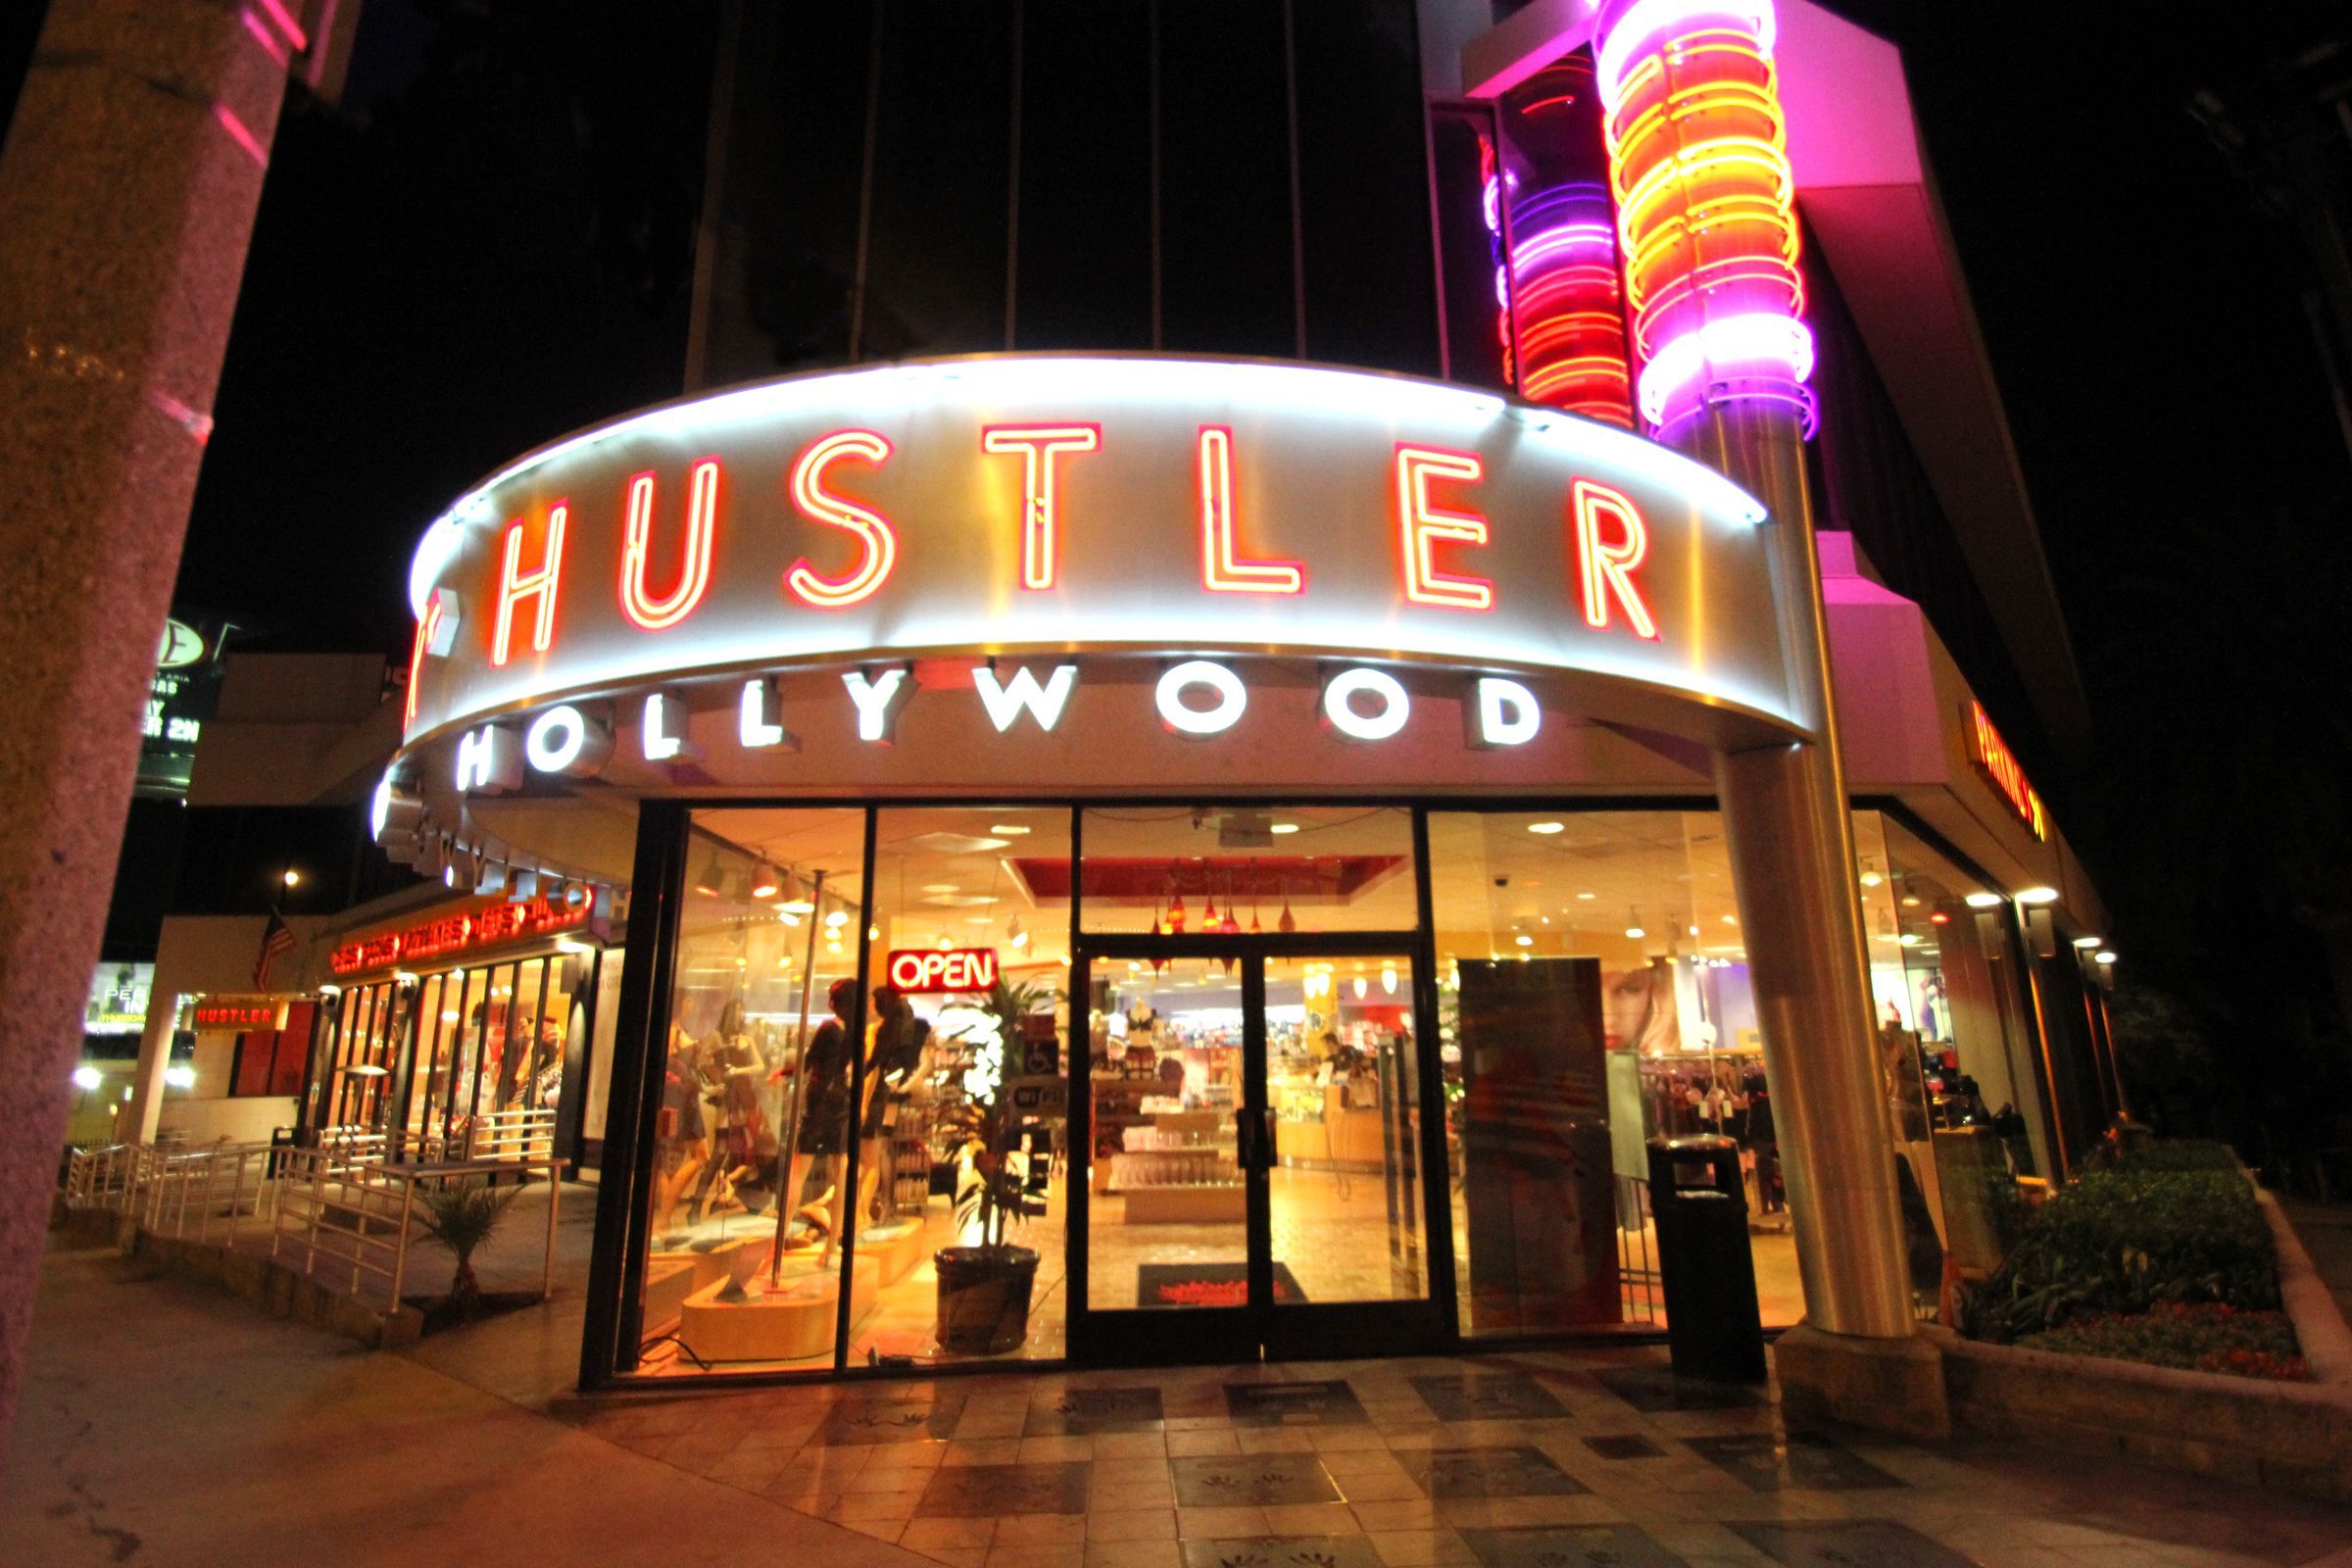 Hollywood hustler birmingham